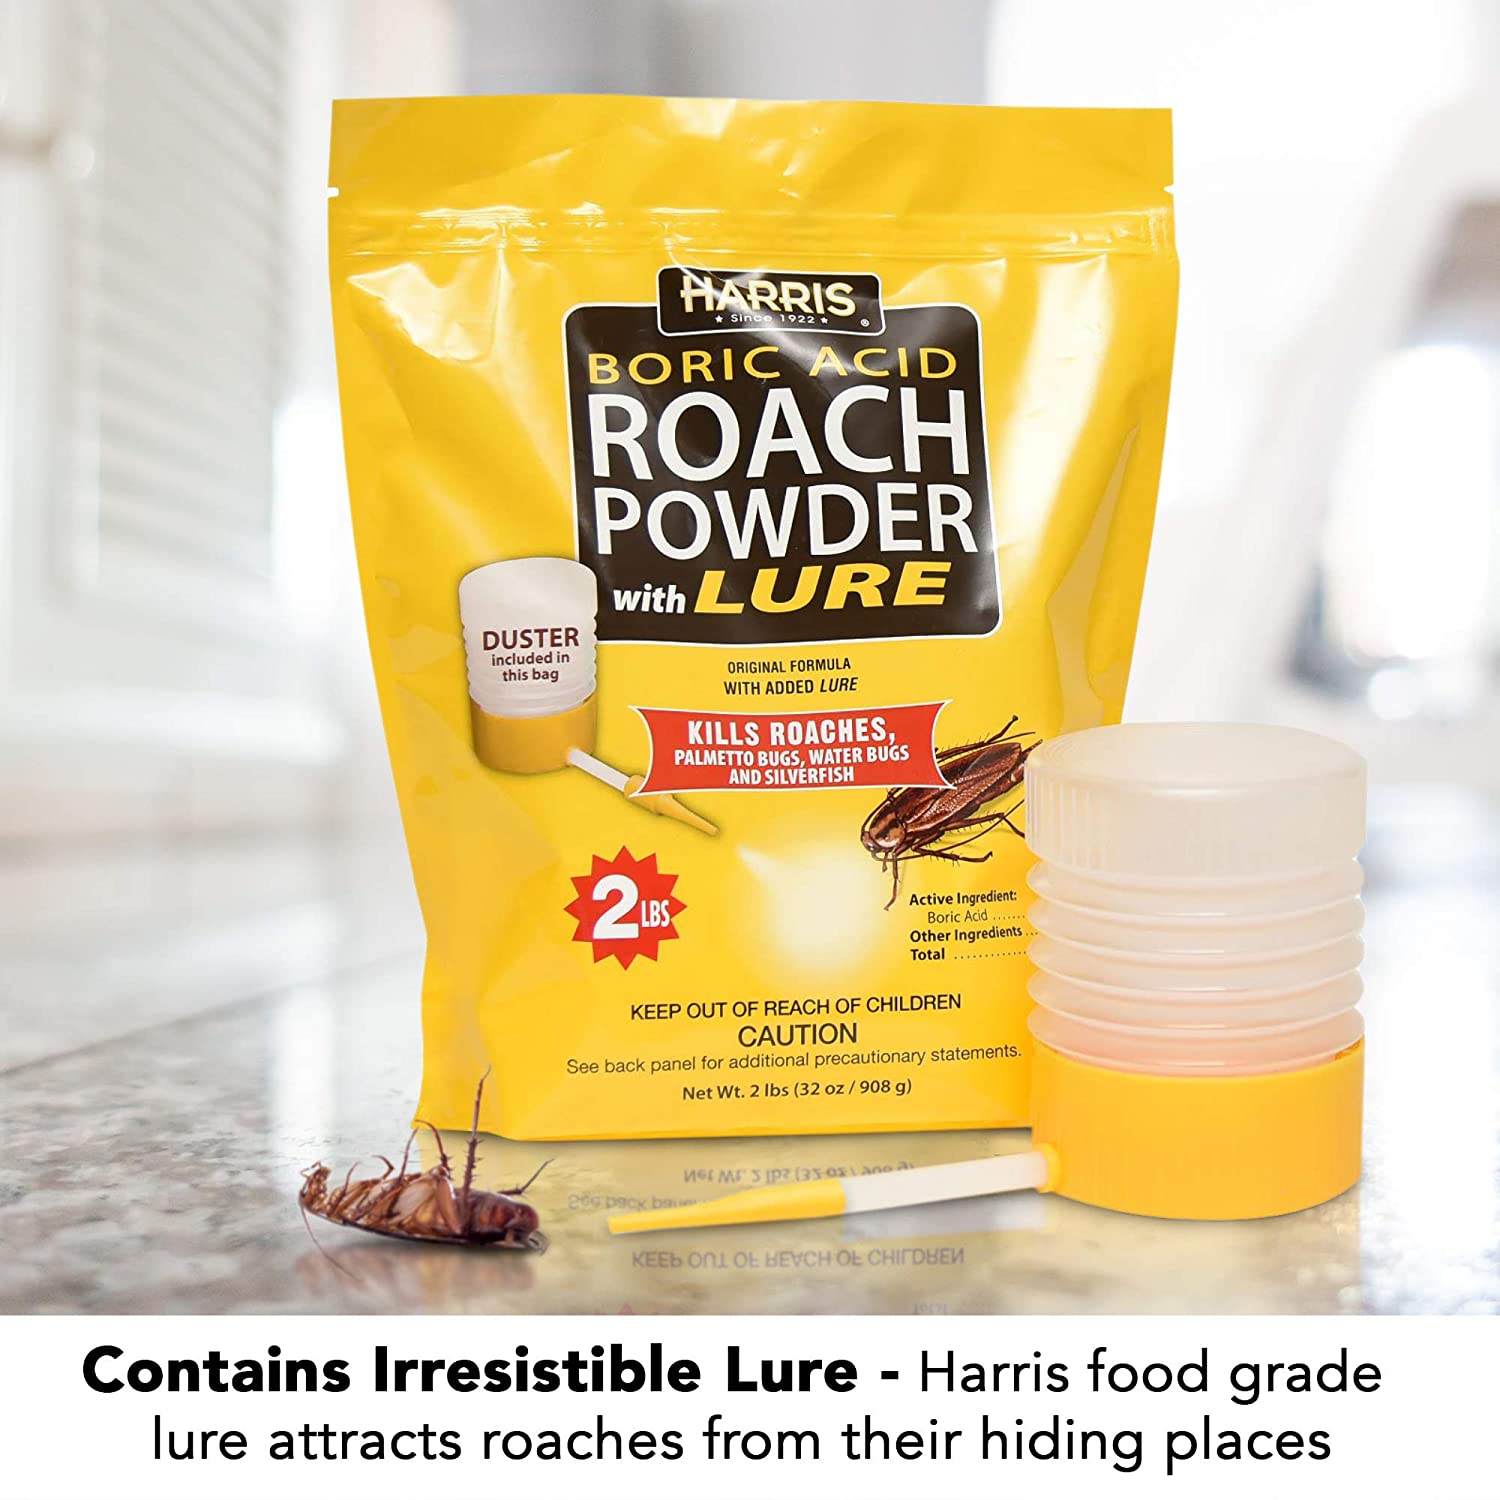 Harris Boric Acid Roach Powder with Lure (32 oz) - PF Harris